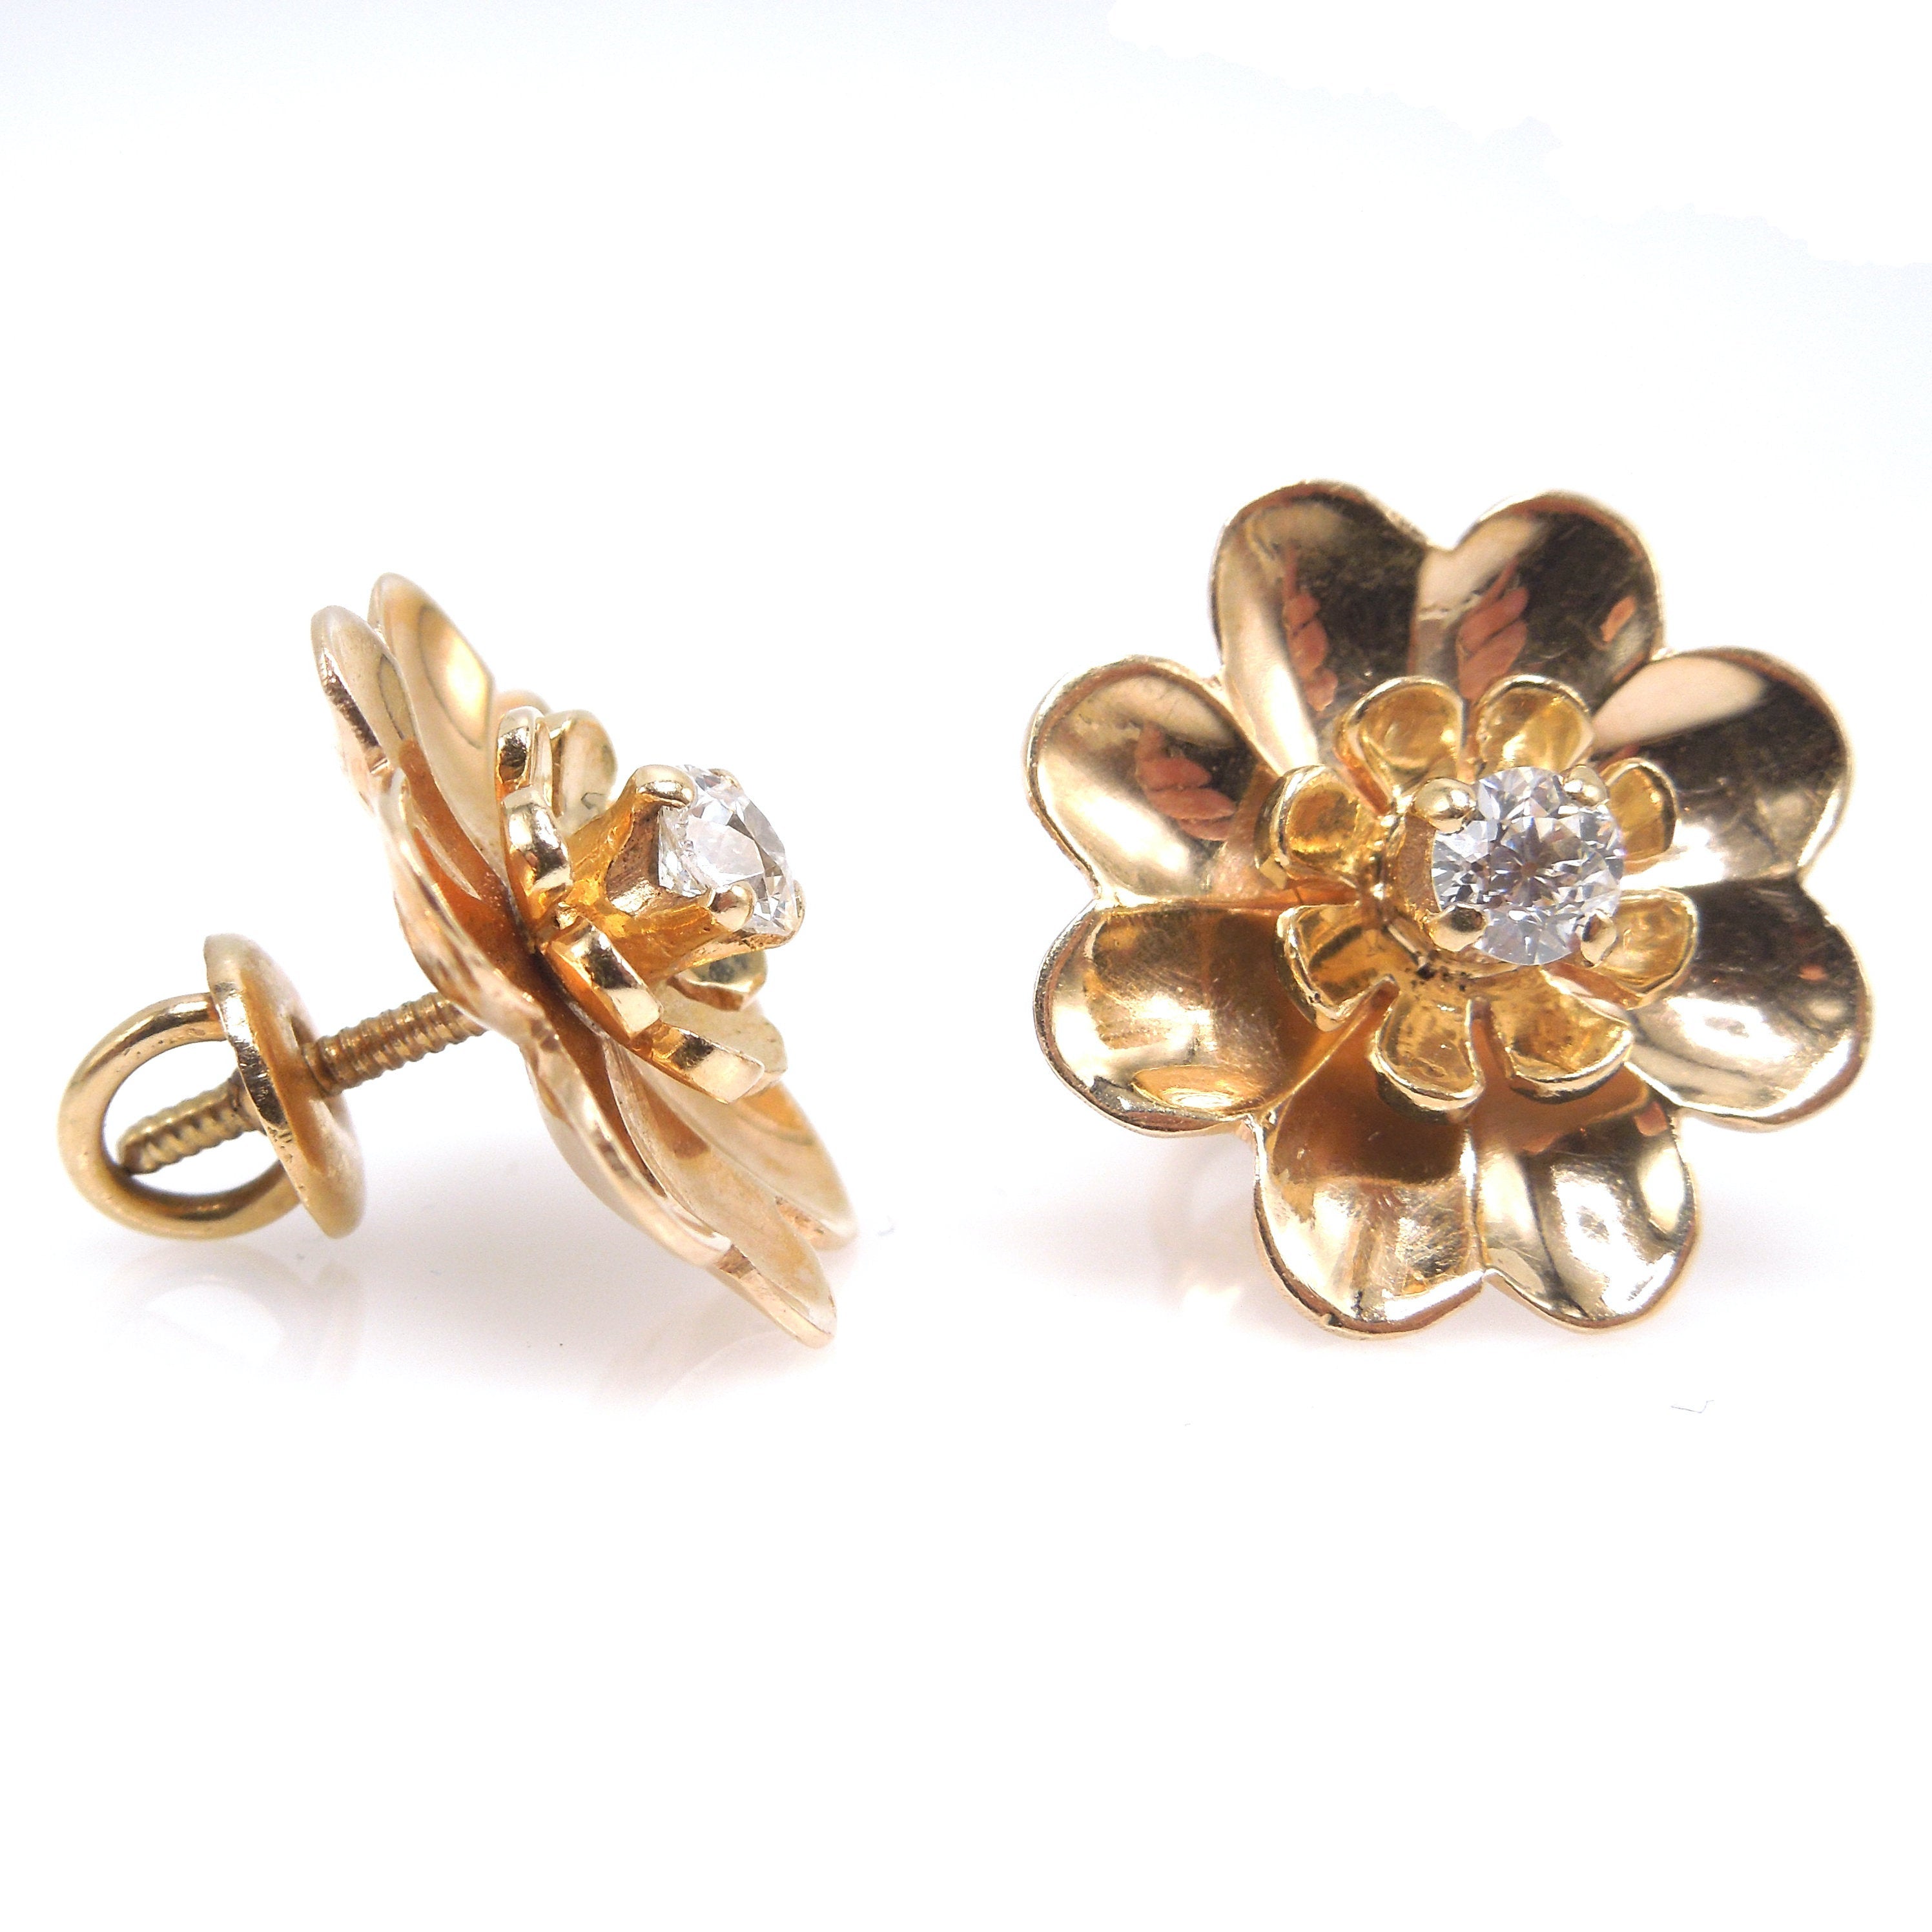 Antique 14K Yellow Gold Daisy Flower Screwback Earrings with European Cut Diamonds